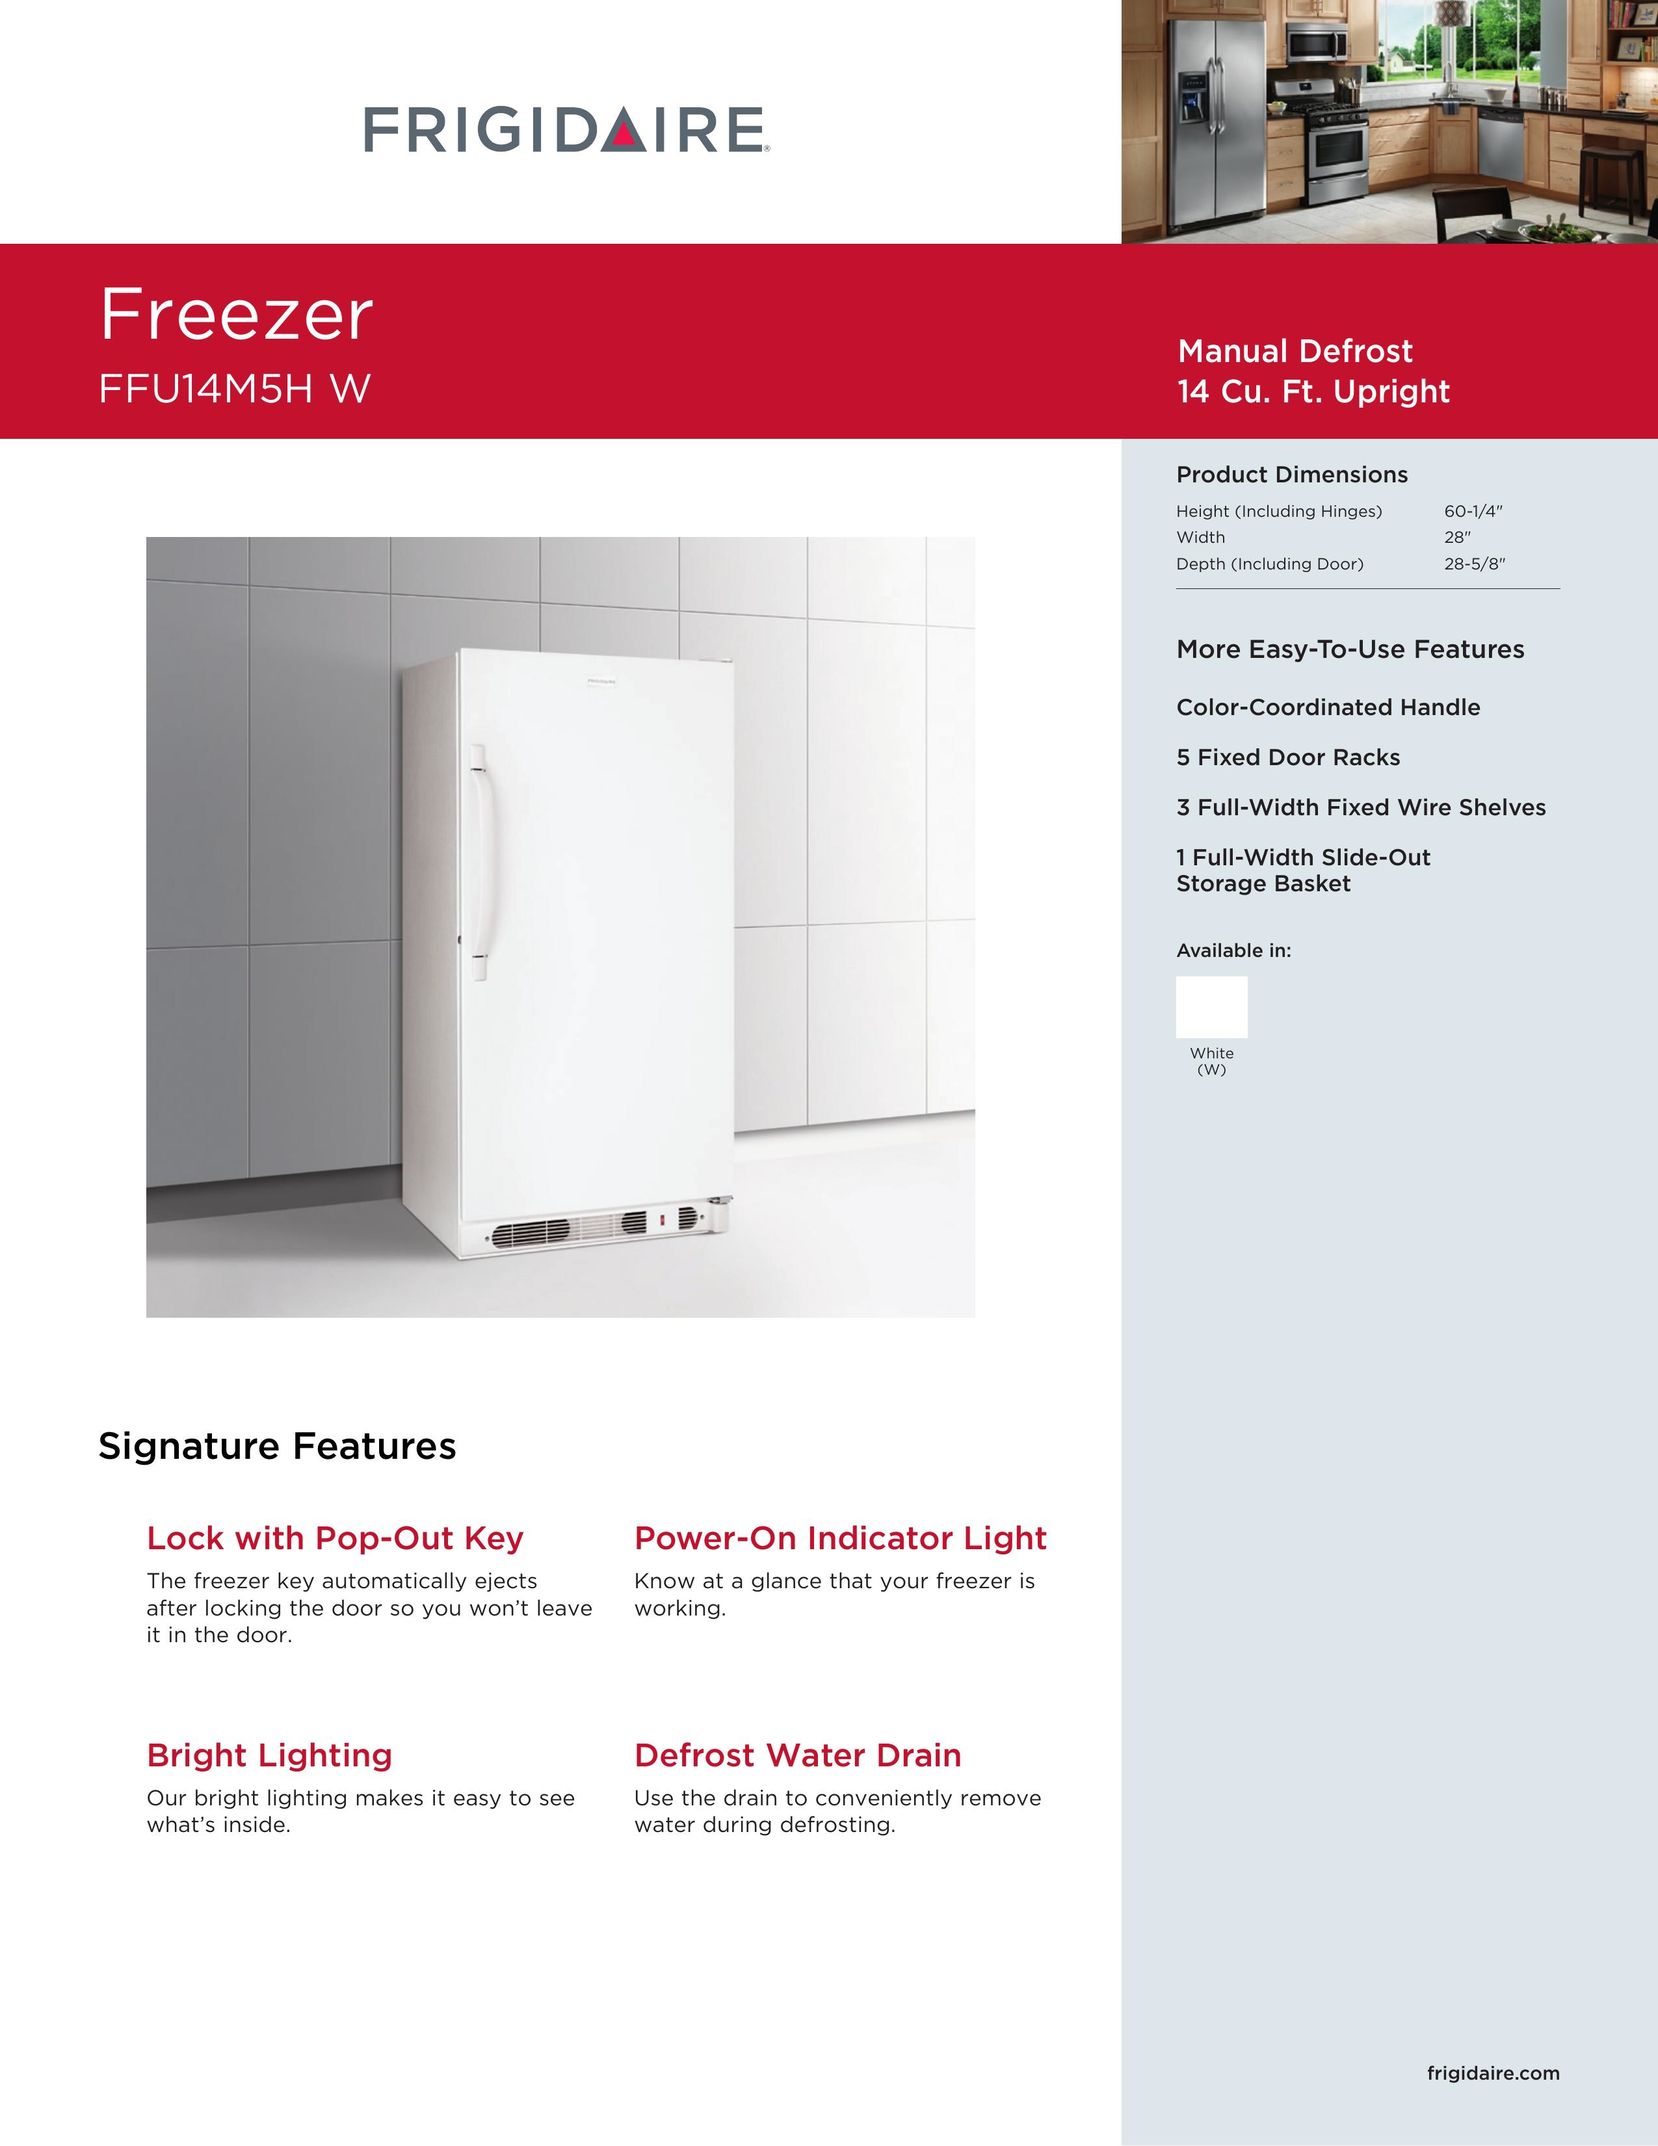 Frigidaire FFU14M5HW Freezer User Manual